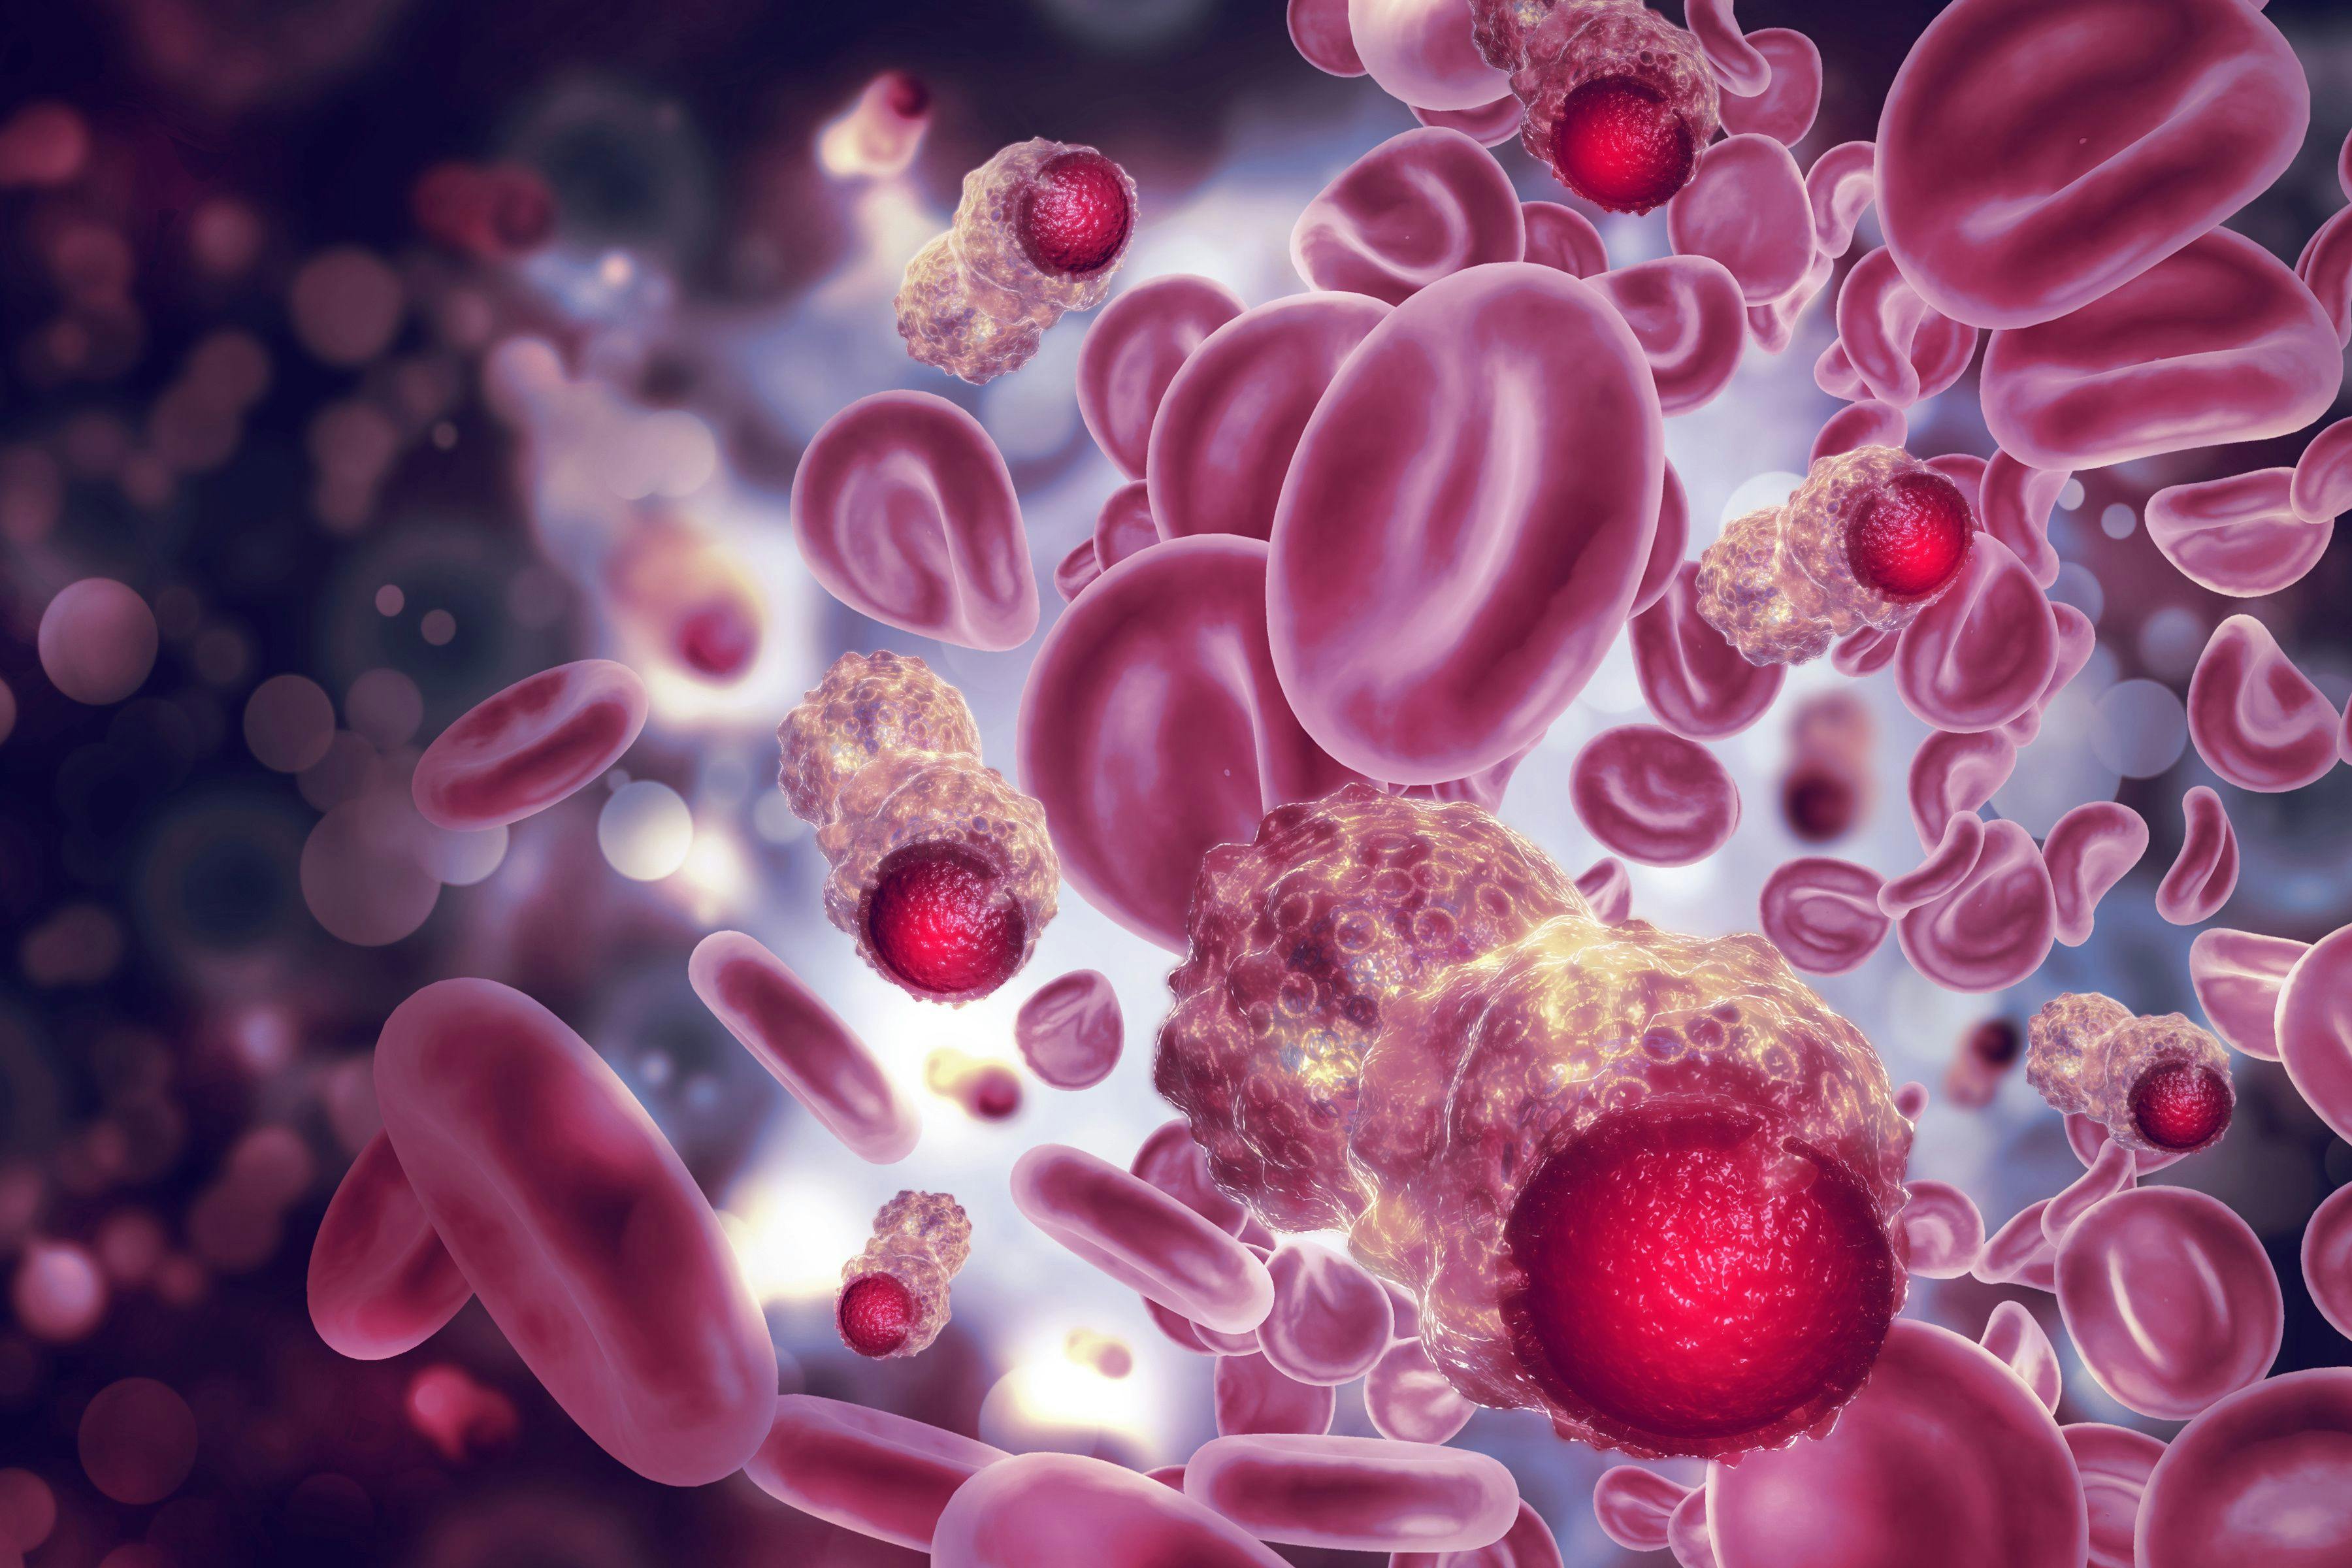 Cancer cells | Image Credit: © Crystal light - www.stock.adobe.com